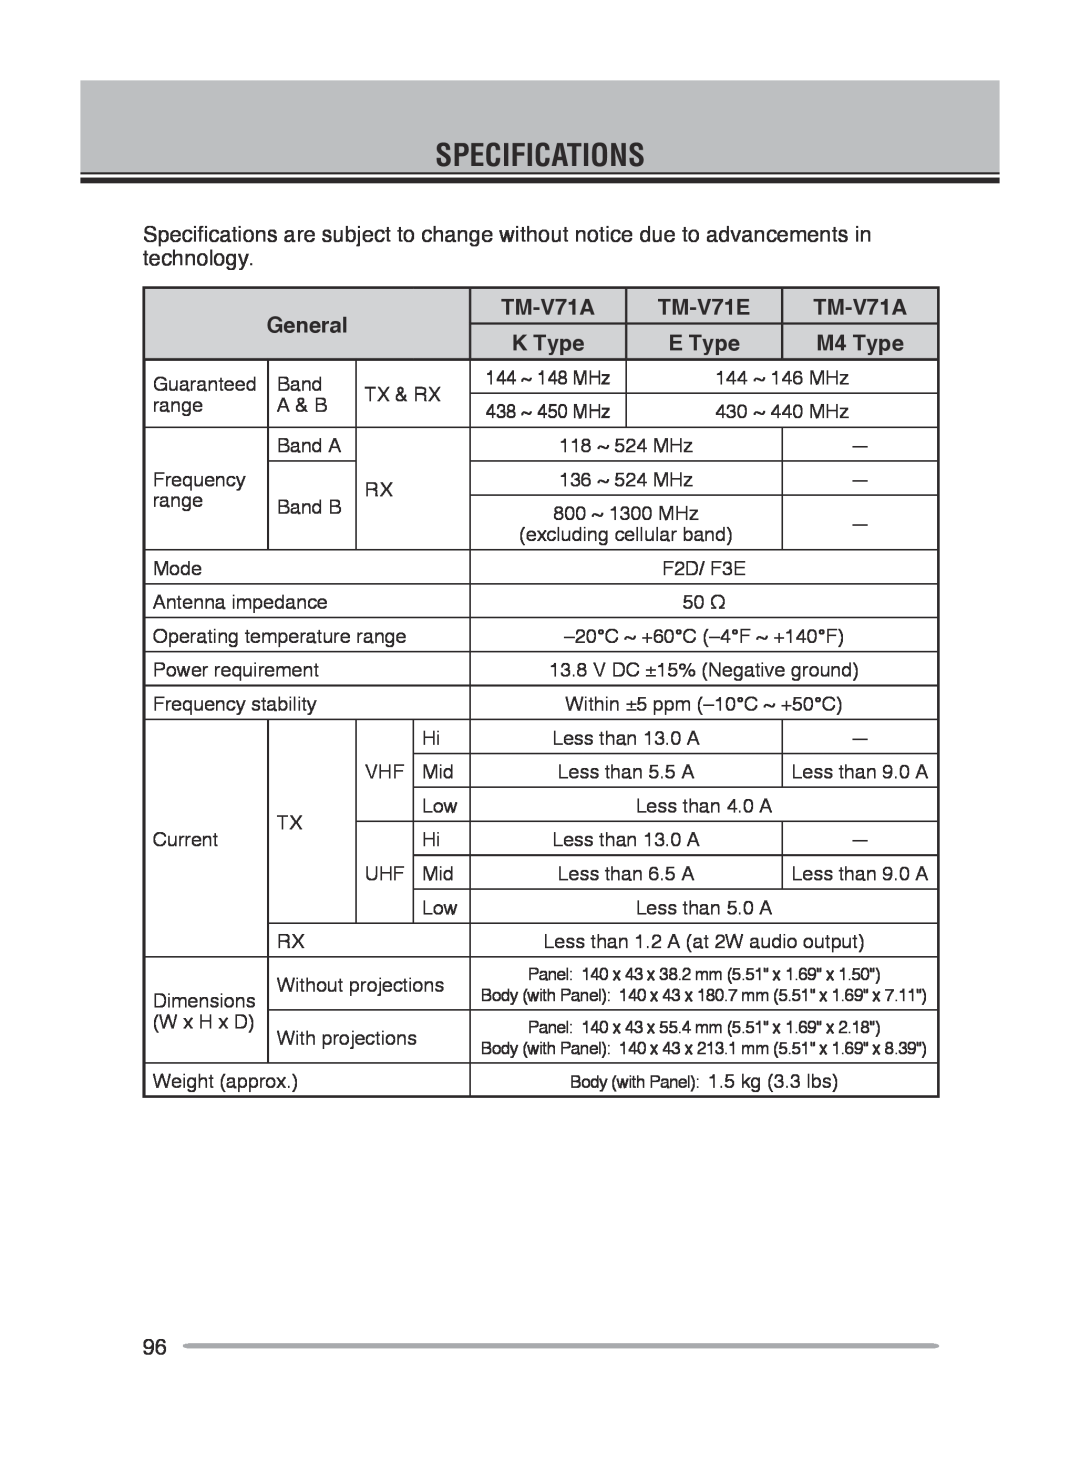 Kenwood TM-V71E instruction manual Specifications, General, TM-V71A, K Type, E Type, M4 Type 